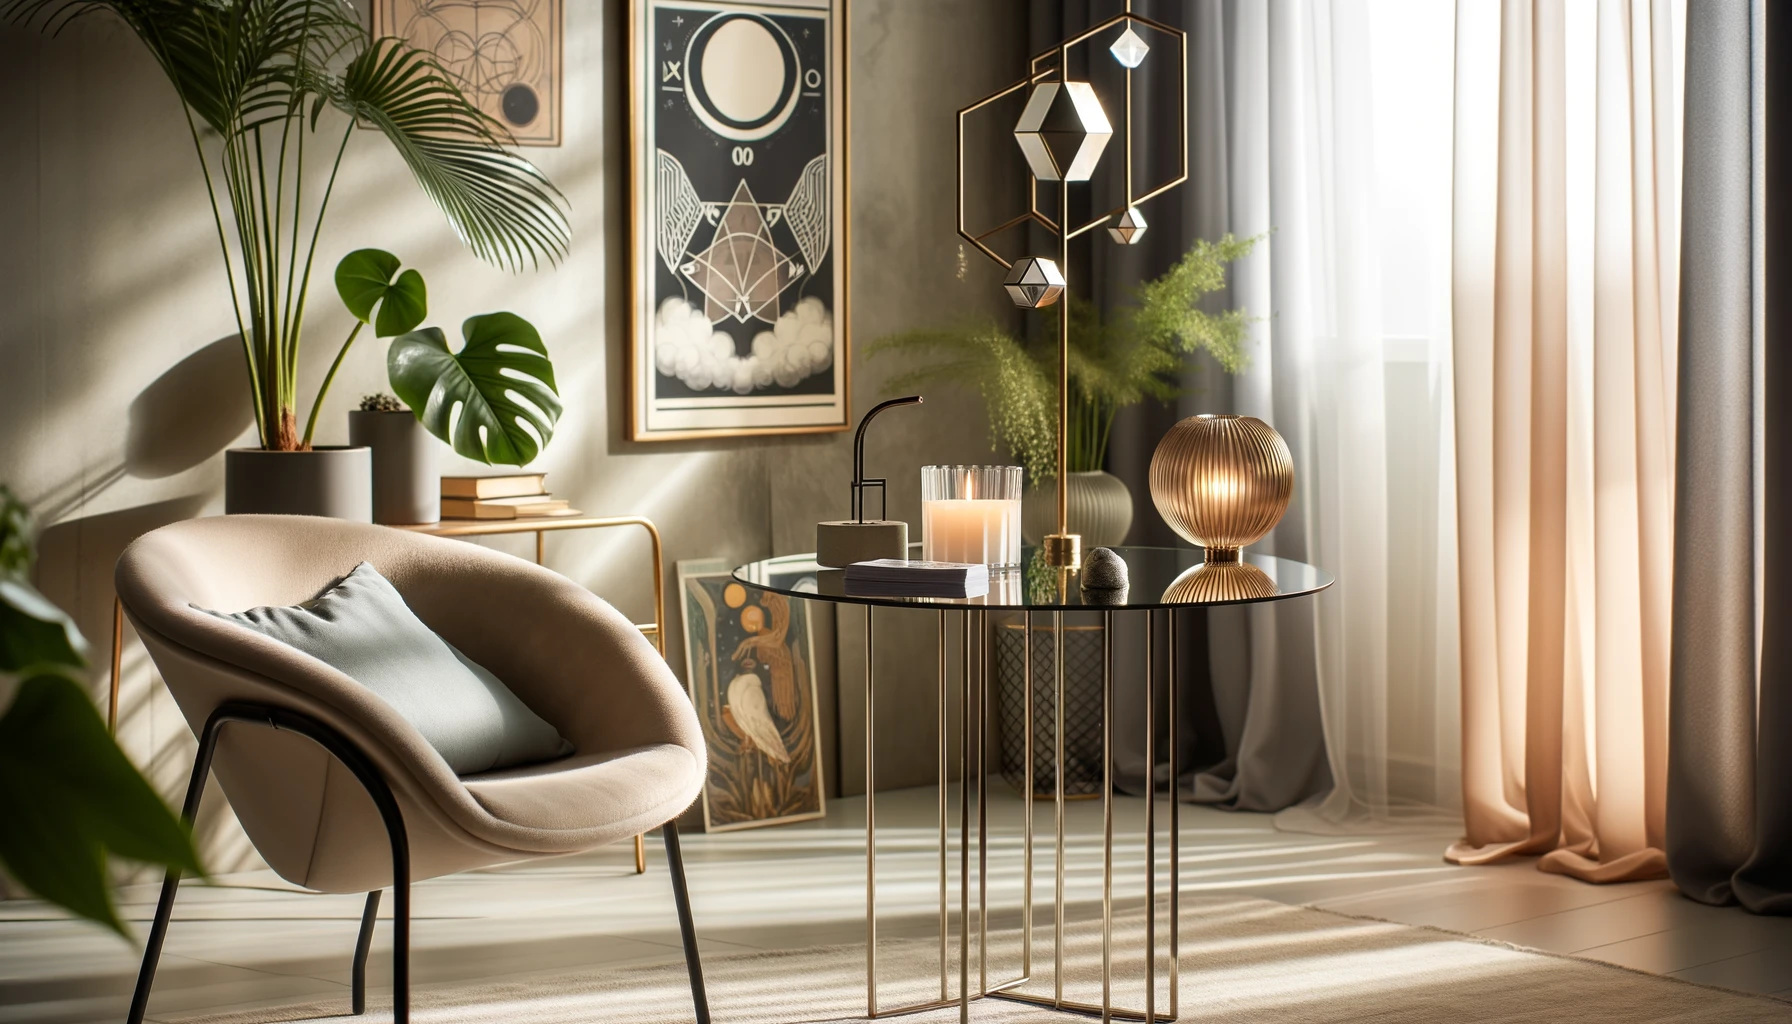 An elegant and modern tarot reading corner with minimalist decor, featuring a sleek, glass table on which a modern tarot card deck lies